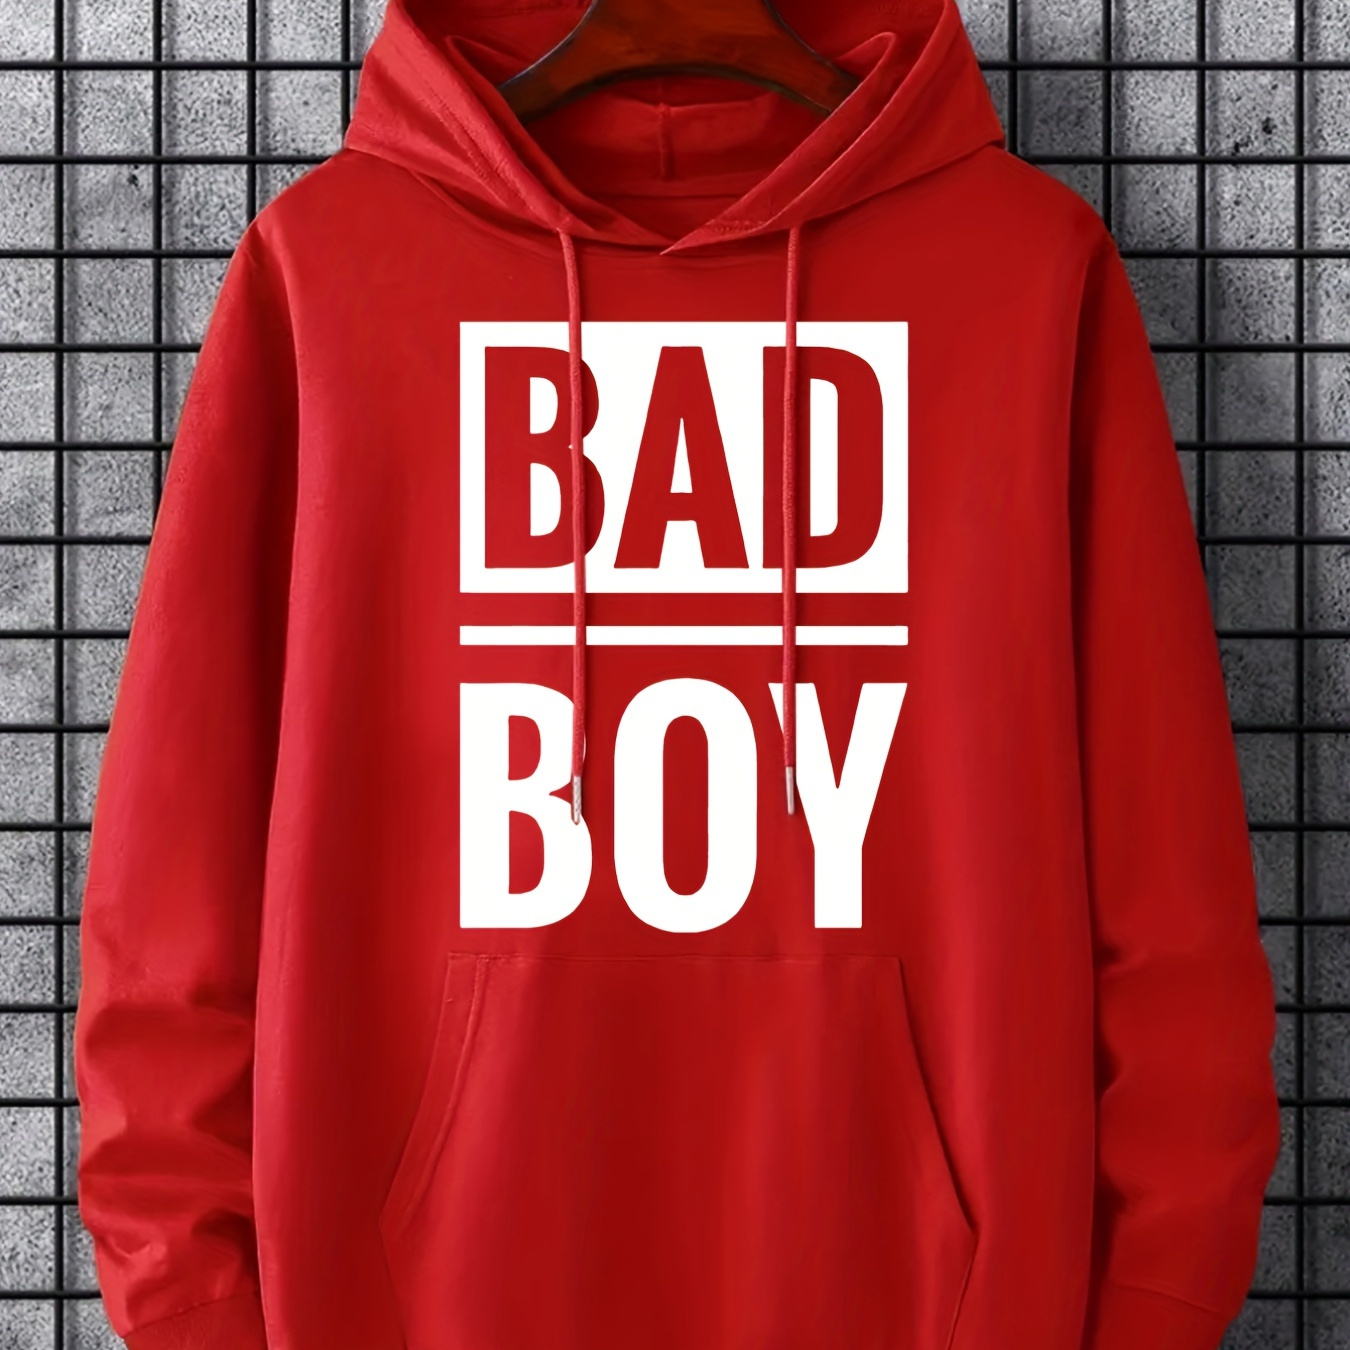 

Hoodies For Men, 'bad Boy' Print Hoodie, Men’s Casual Pullover Hooded Sweatshirt With Kangaroo Pocket For Spring Fall, As Gifts